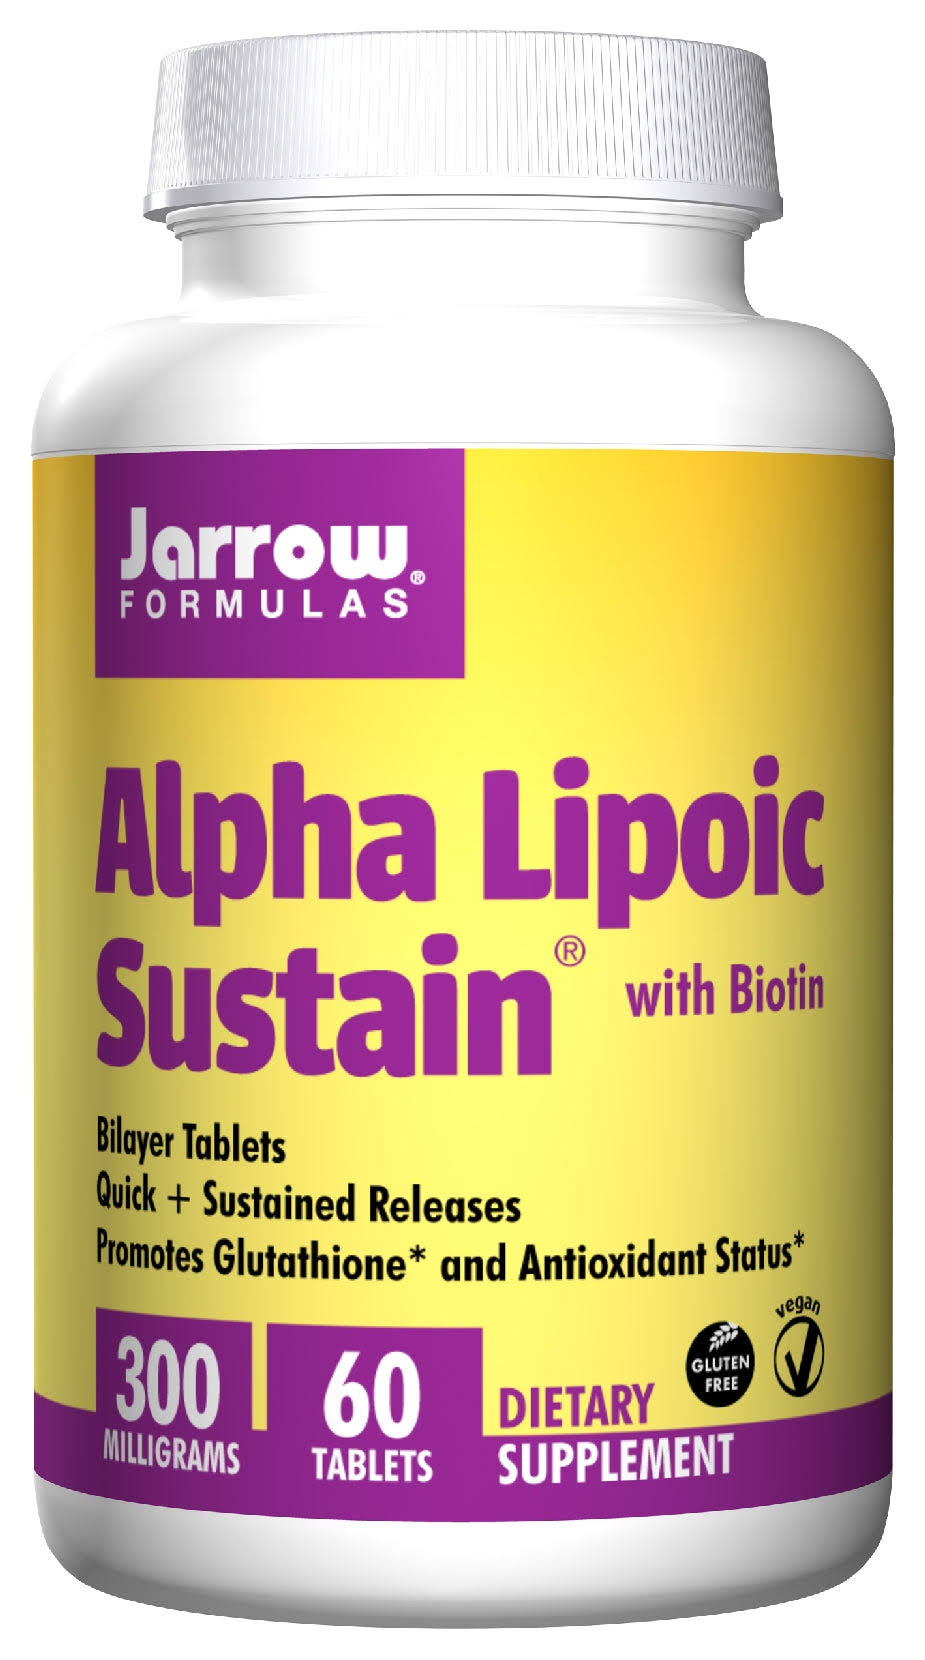 Jarrow Formulas Alpha Lipoic Sustain